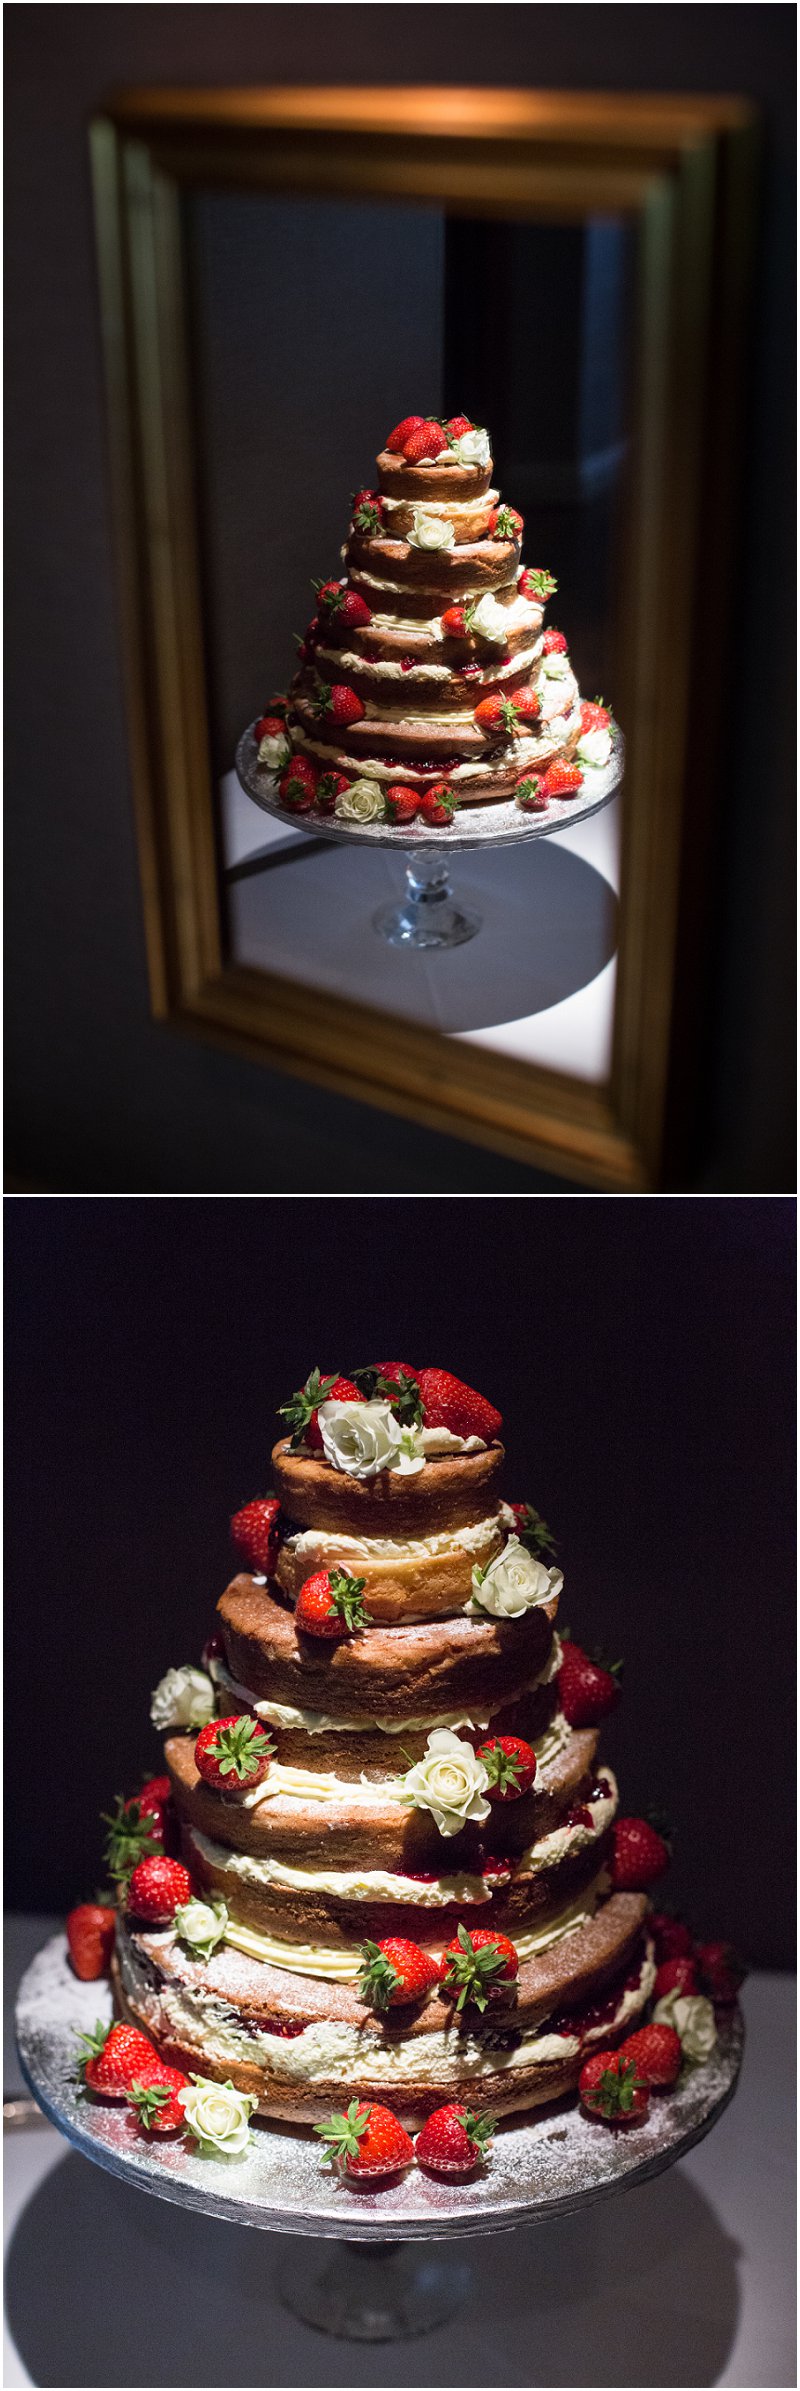 Wedding cake with Strawberries at Linthwaite House Hotel, Cumbria